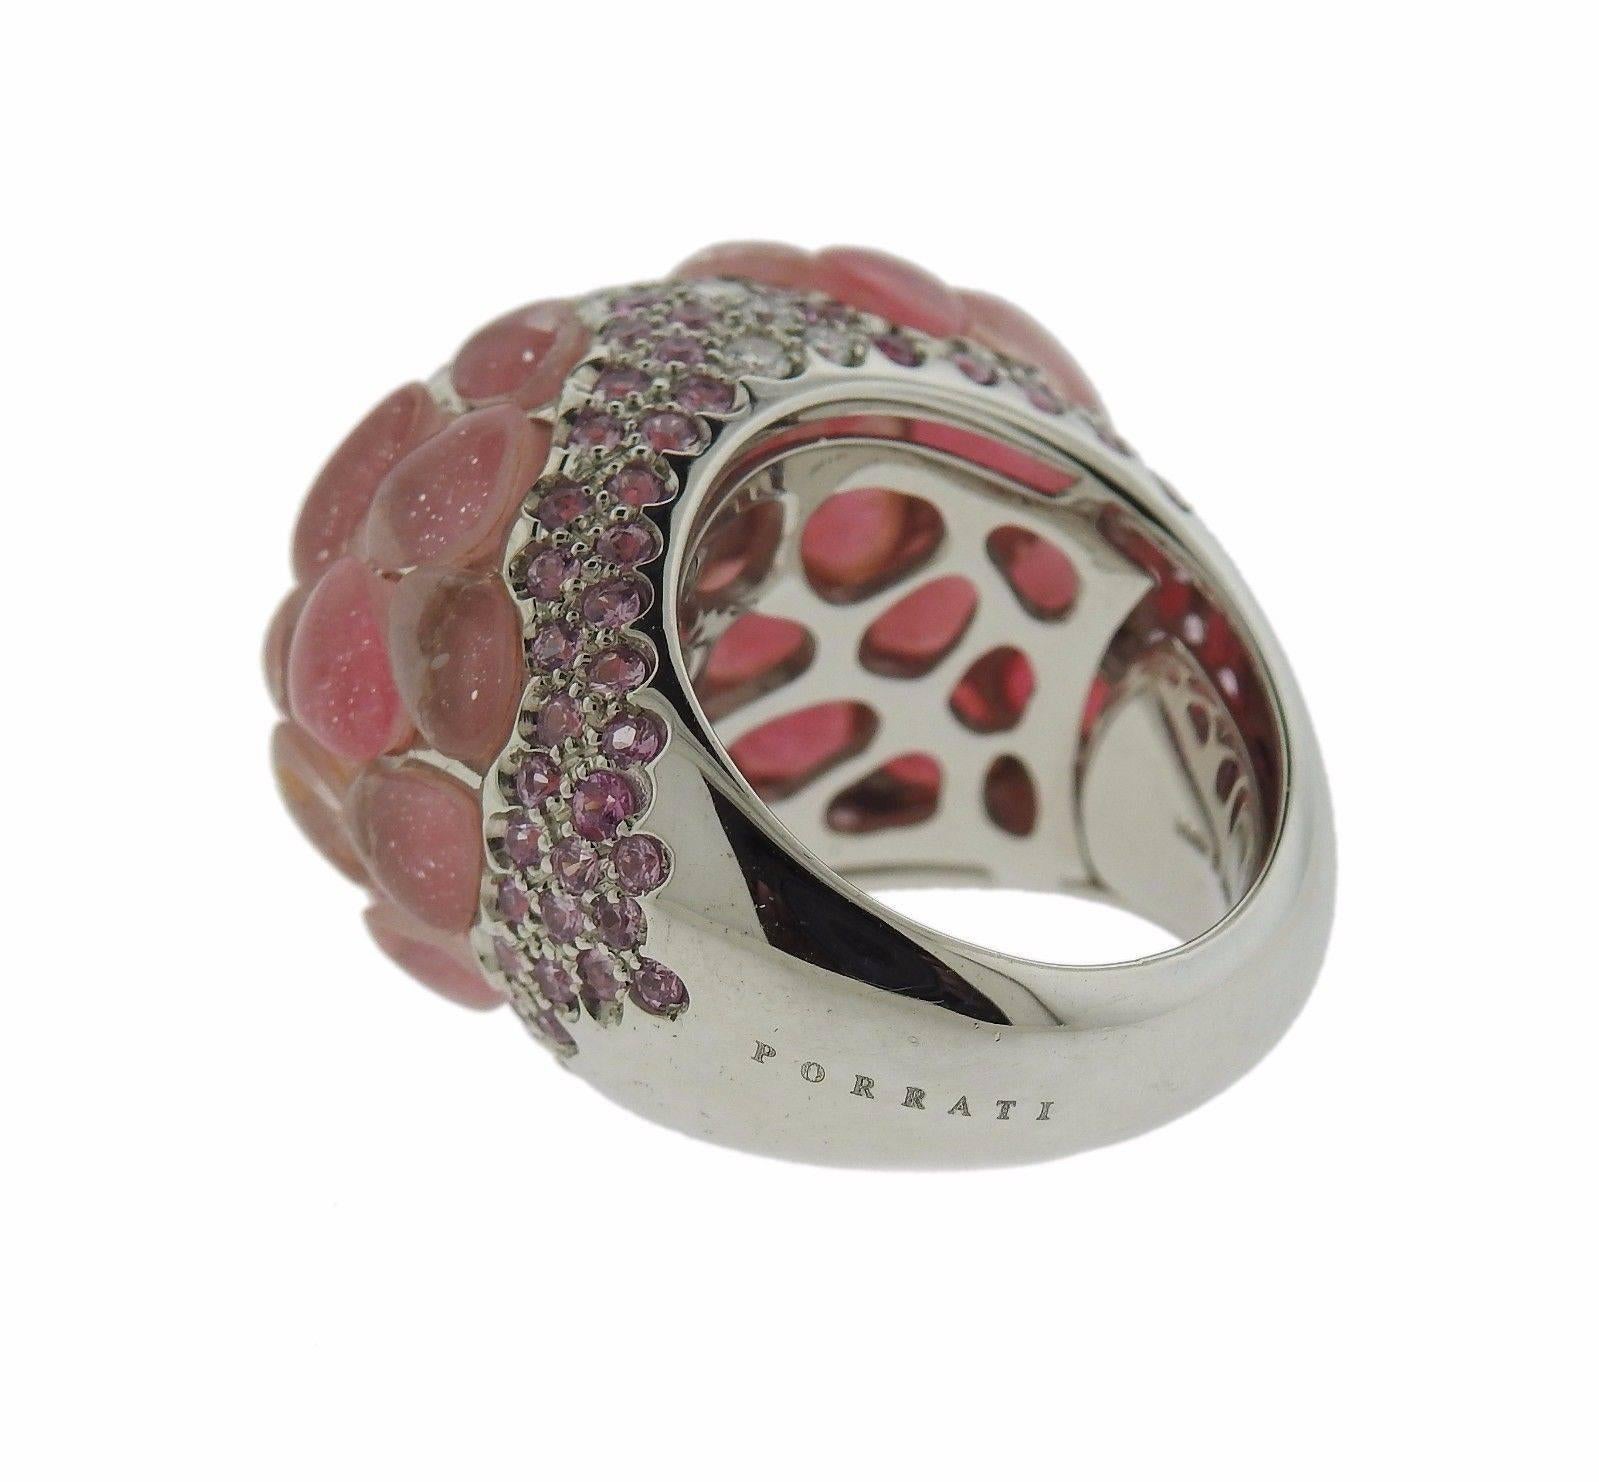 Porrati Pink Sapphire Gemstone Diamond Dome Ring 3